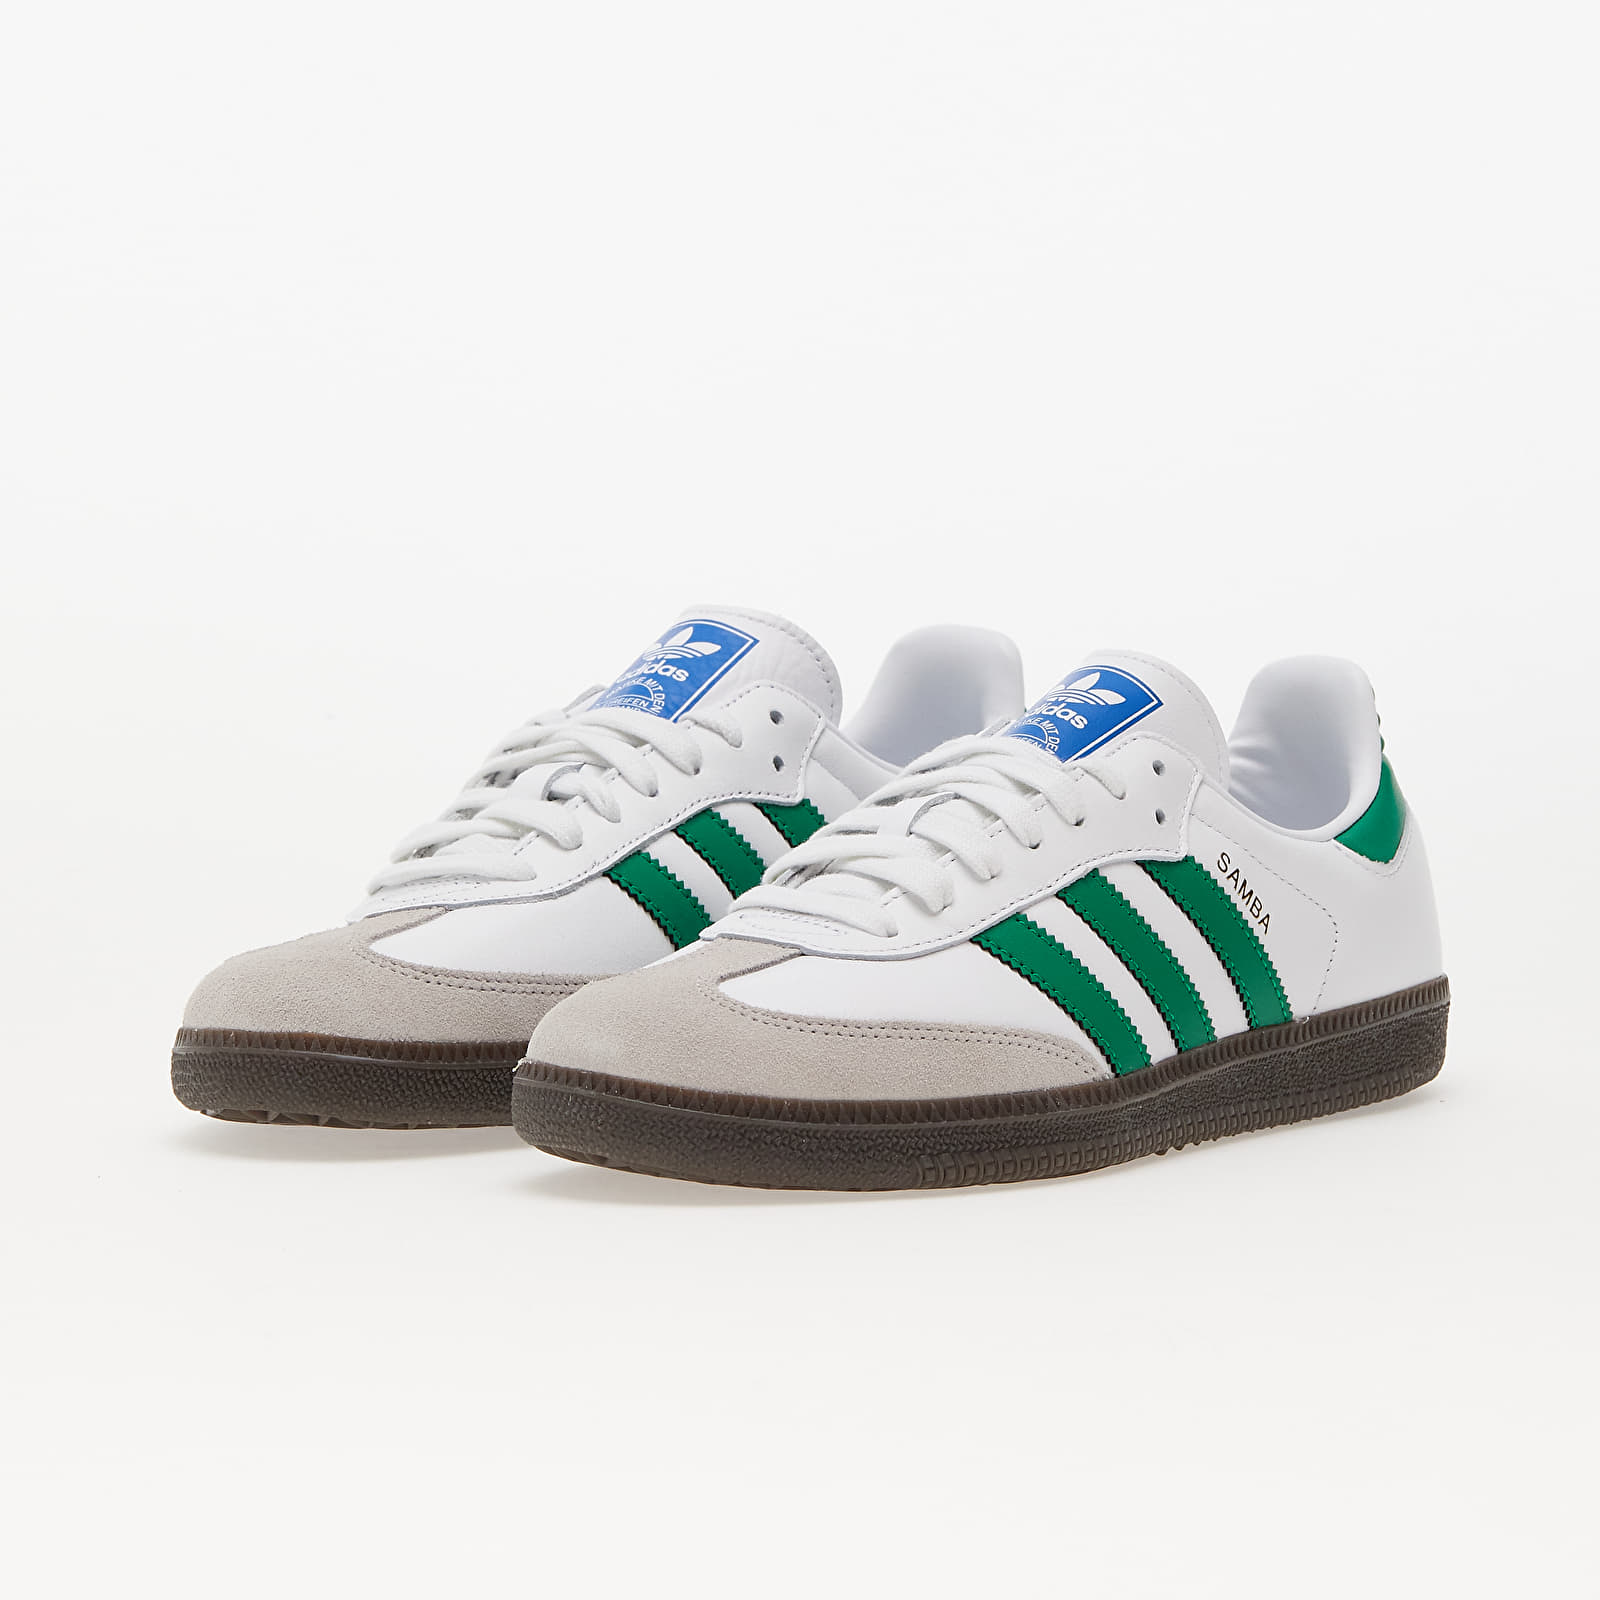 Men's shoes adidas Samba Og Ftw White/ Green/ Supplier Colour | Footshop